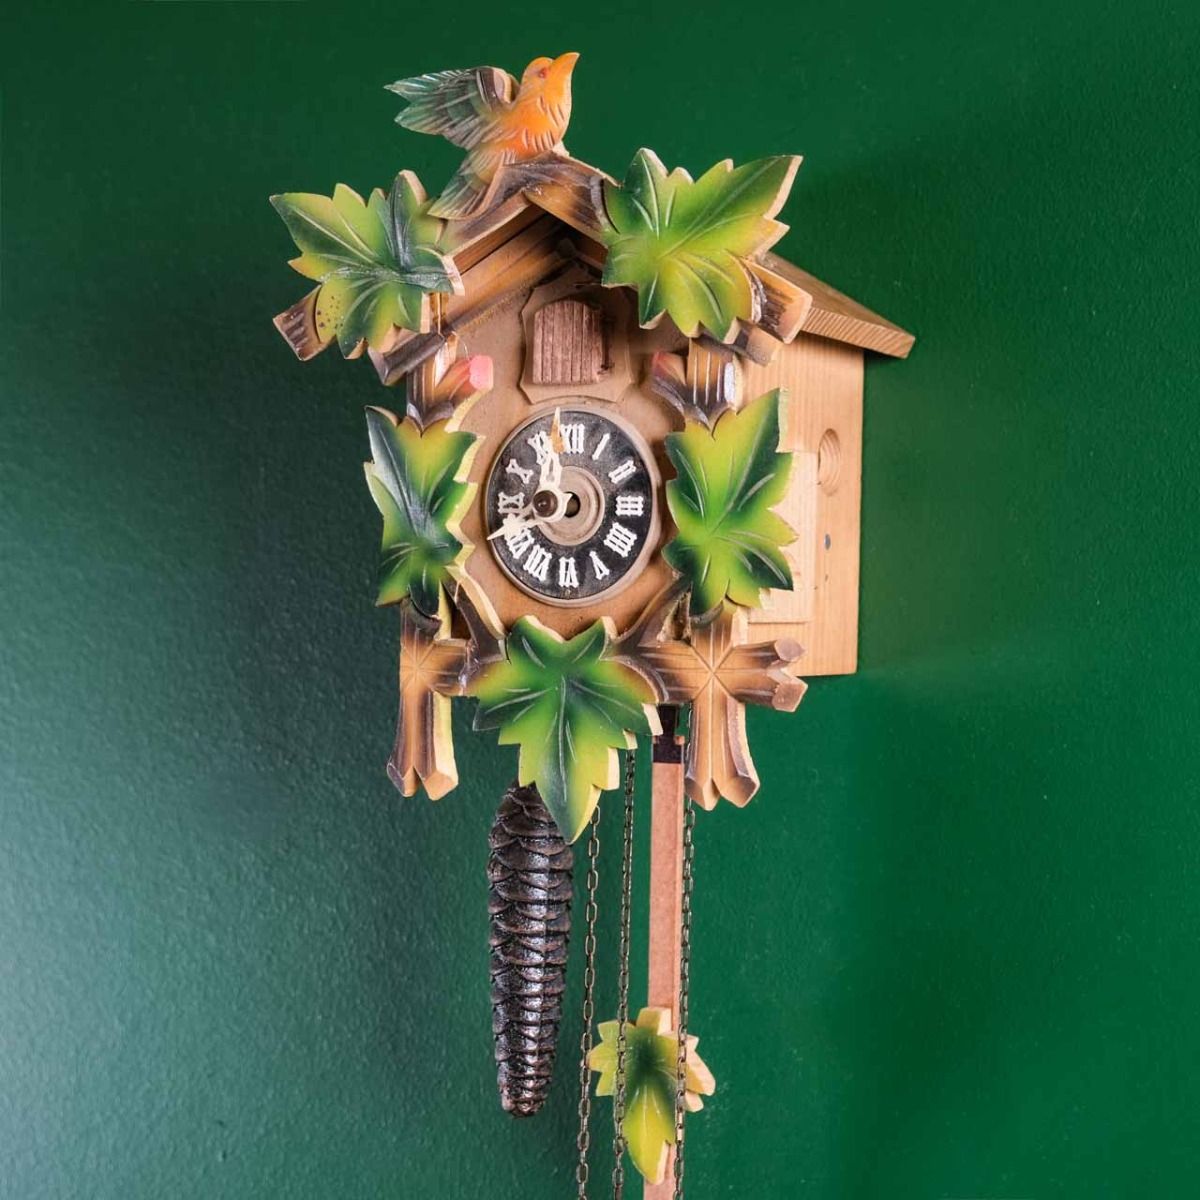 Cuckoo clock,Vintage German wooden cuckoo clock